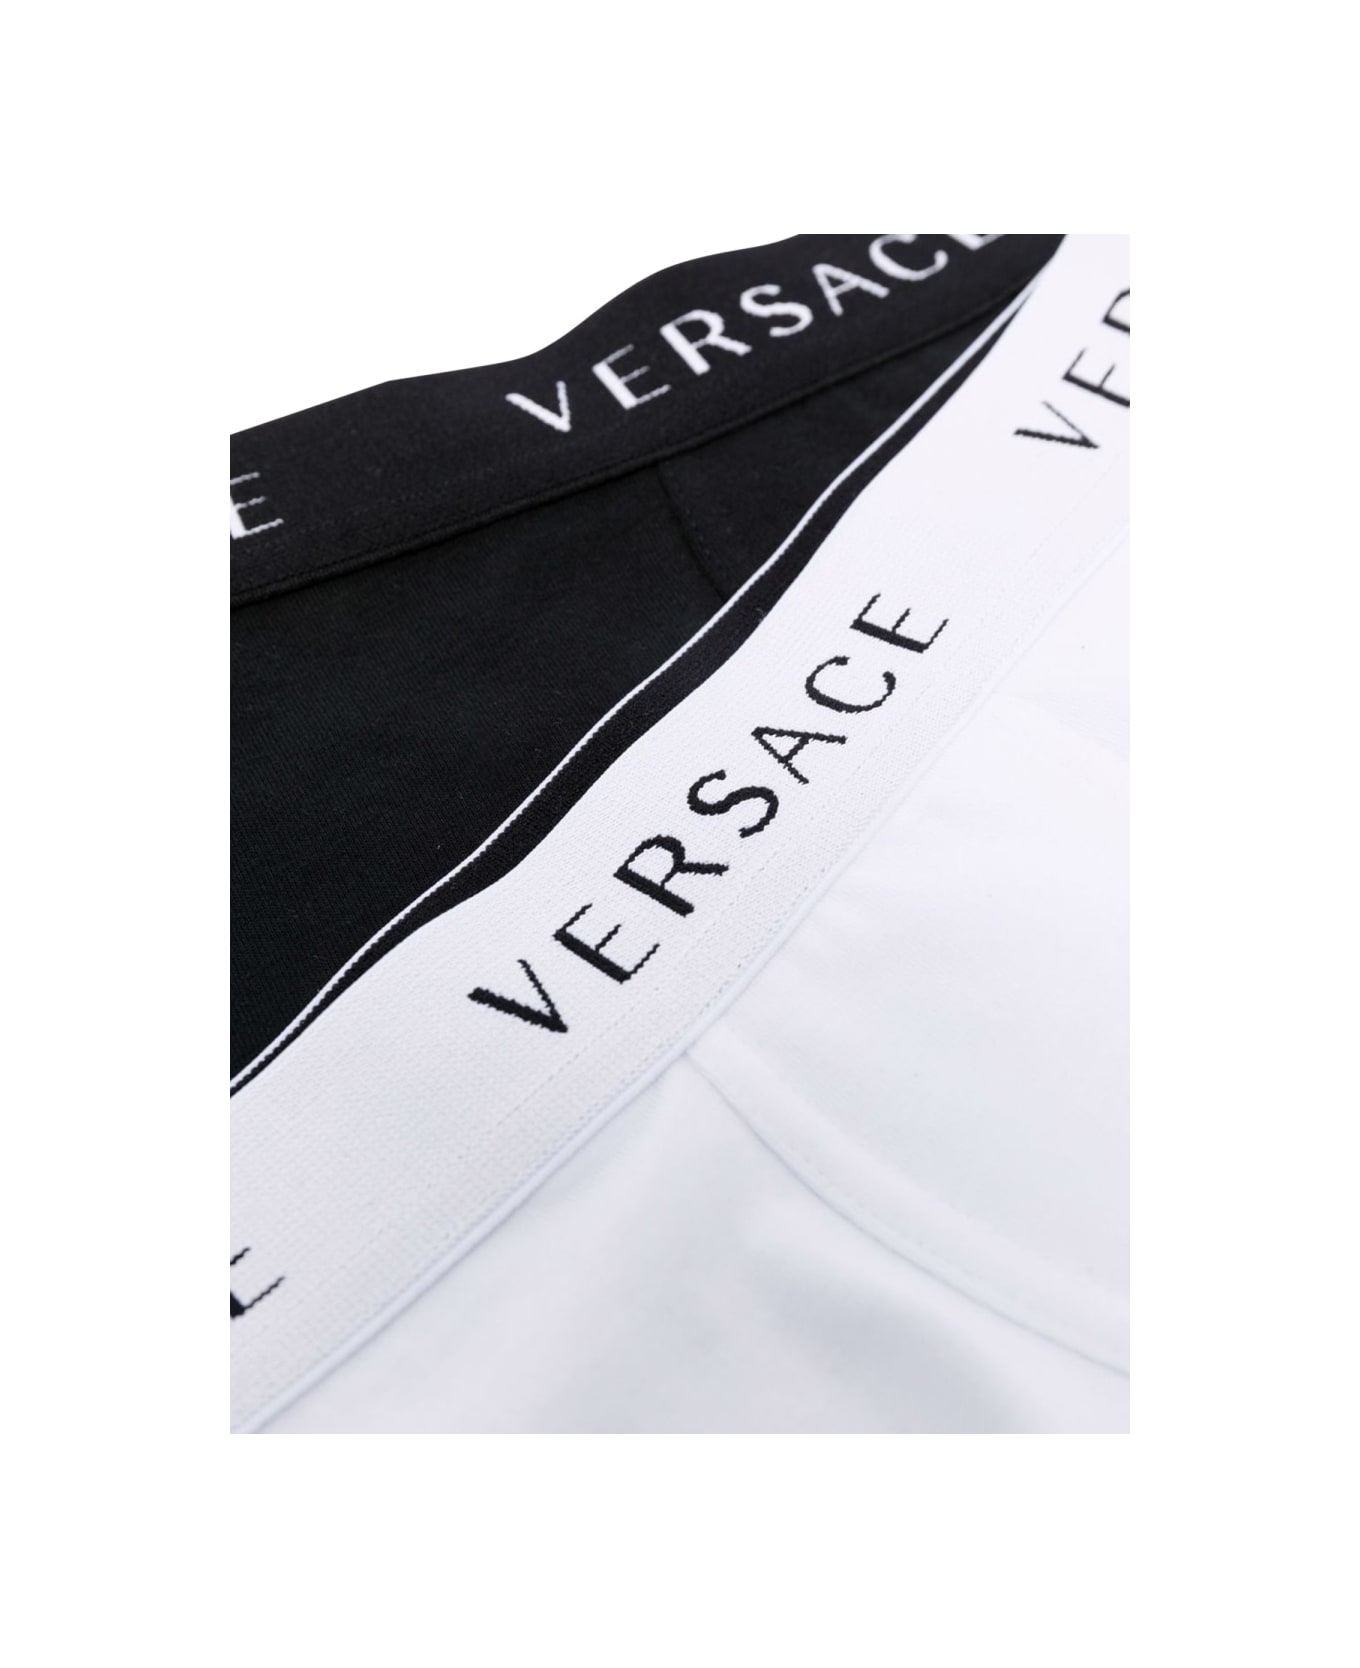 Versace Bi-pack - MULTICOLOUR